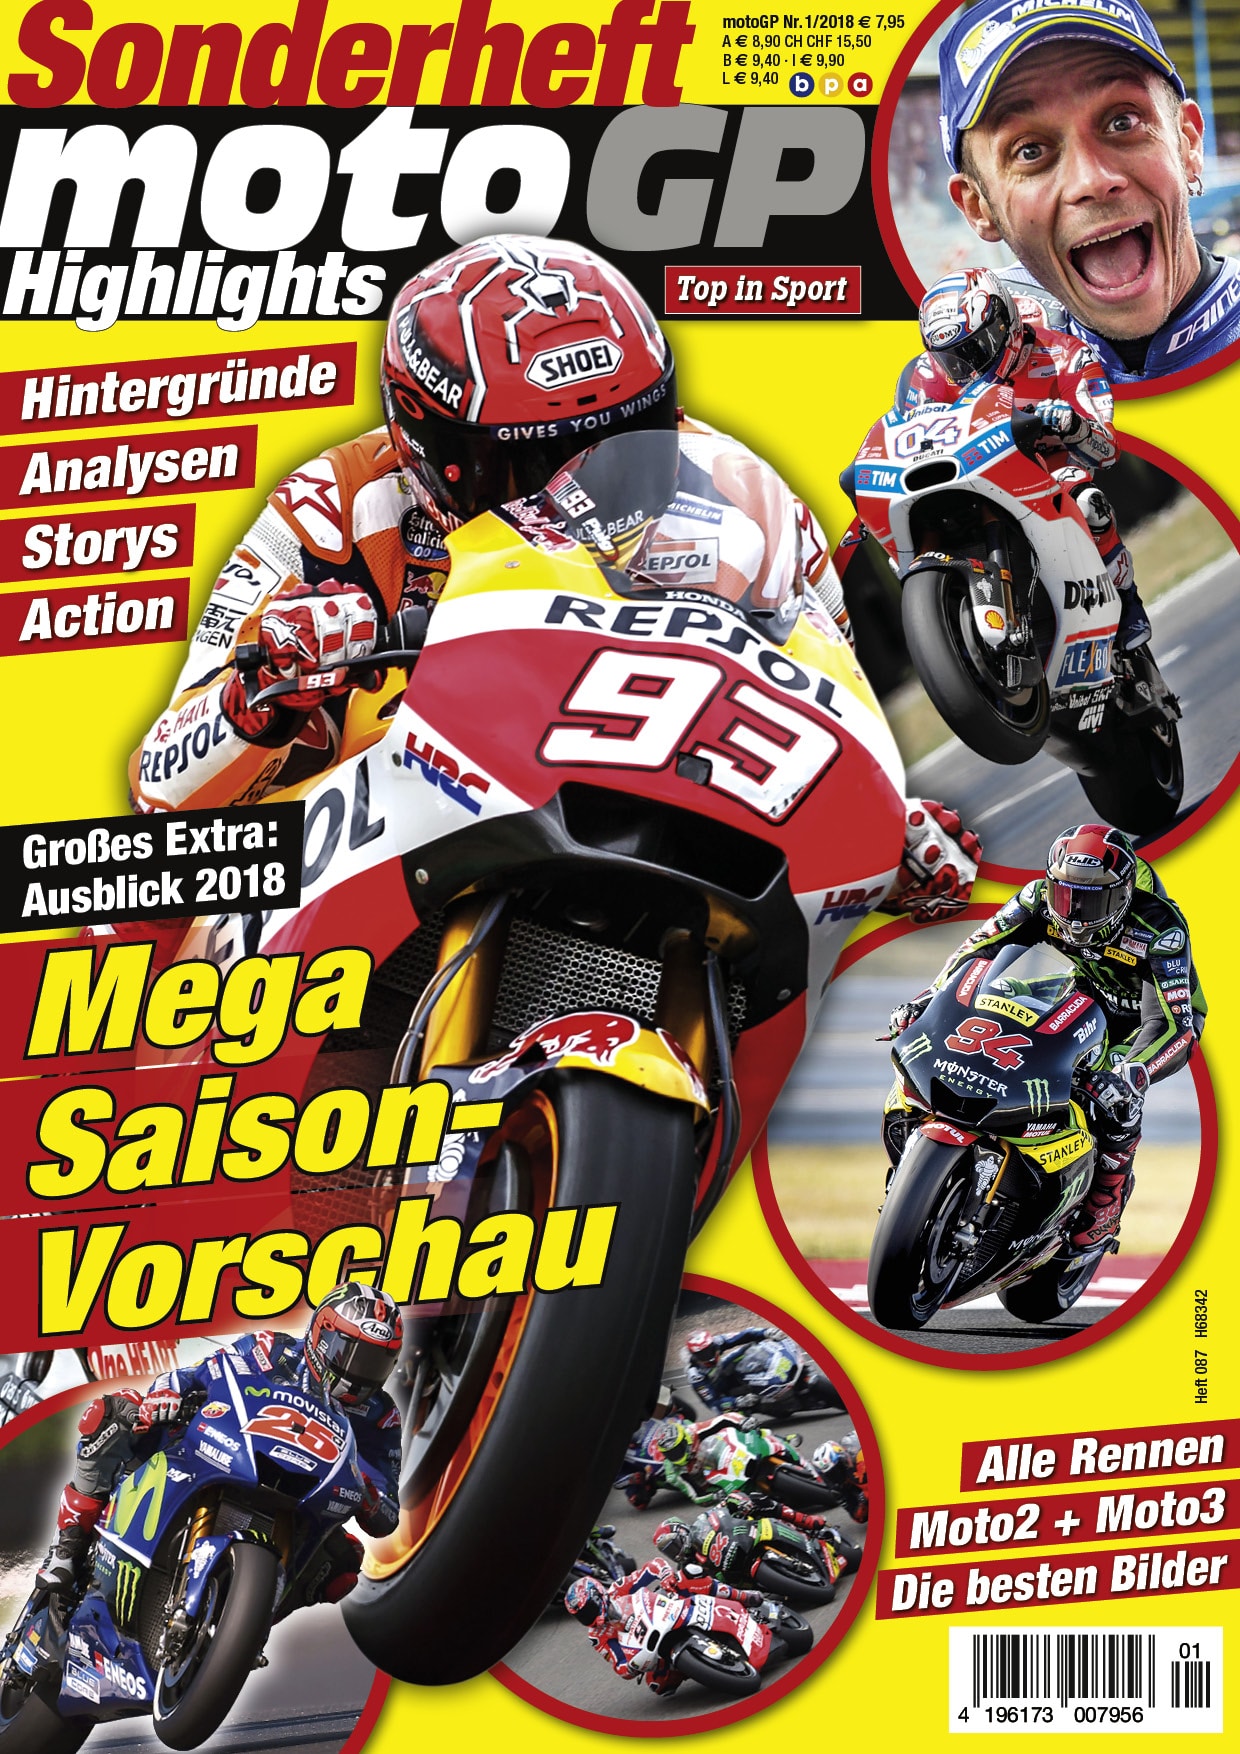 MotoGP Sonderheft Highlights 01/18